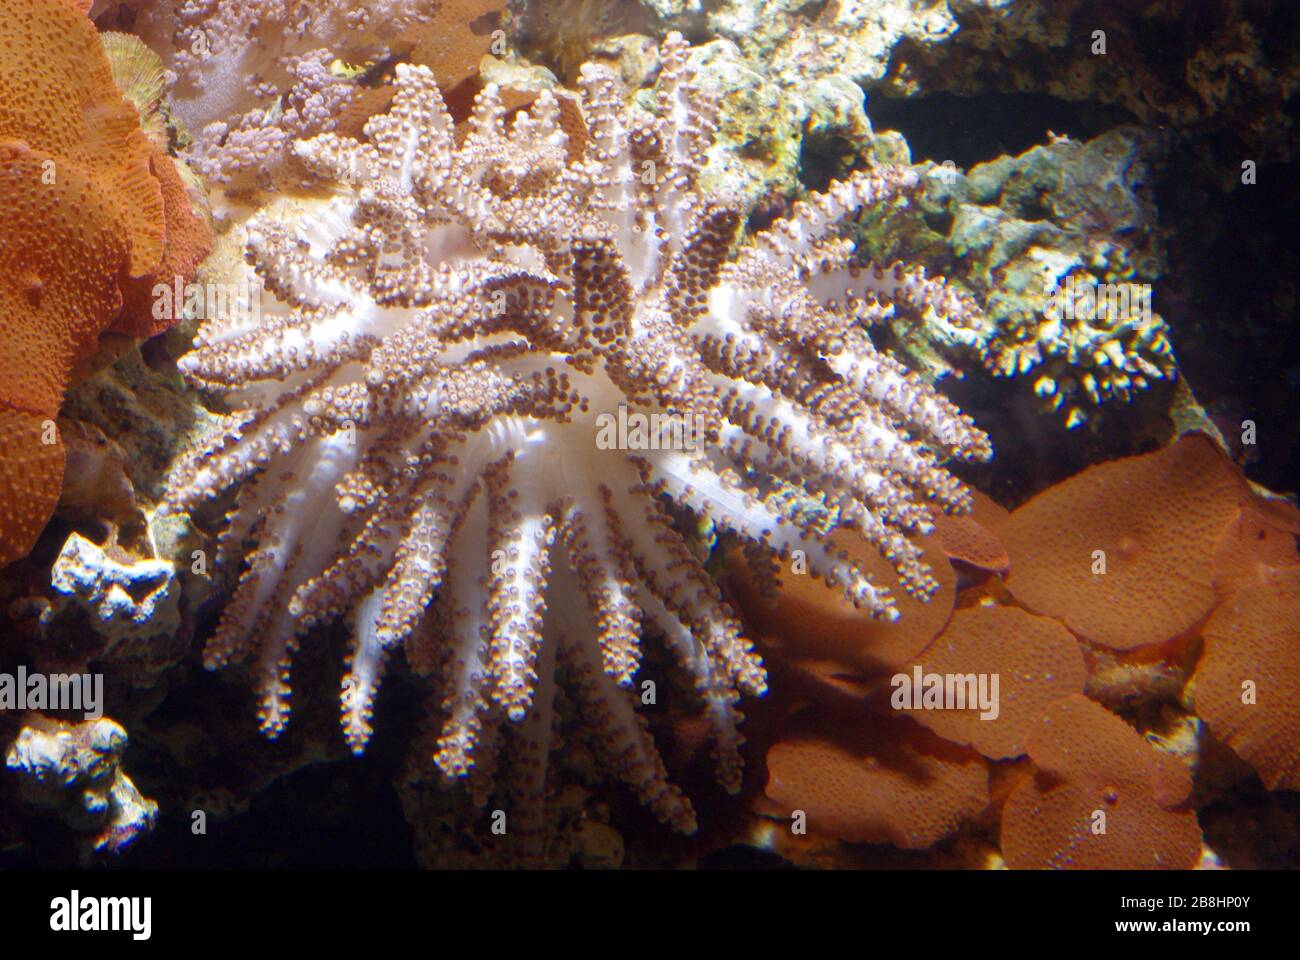 Kenya tree coral, Capnella sp. Stock Photo